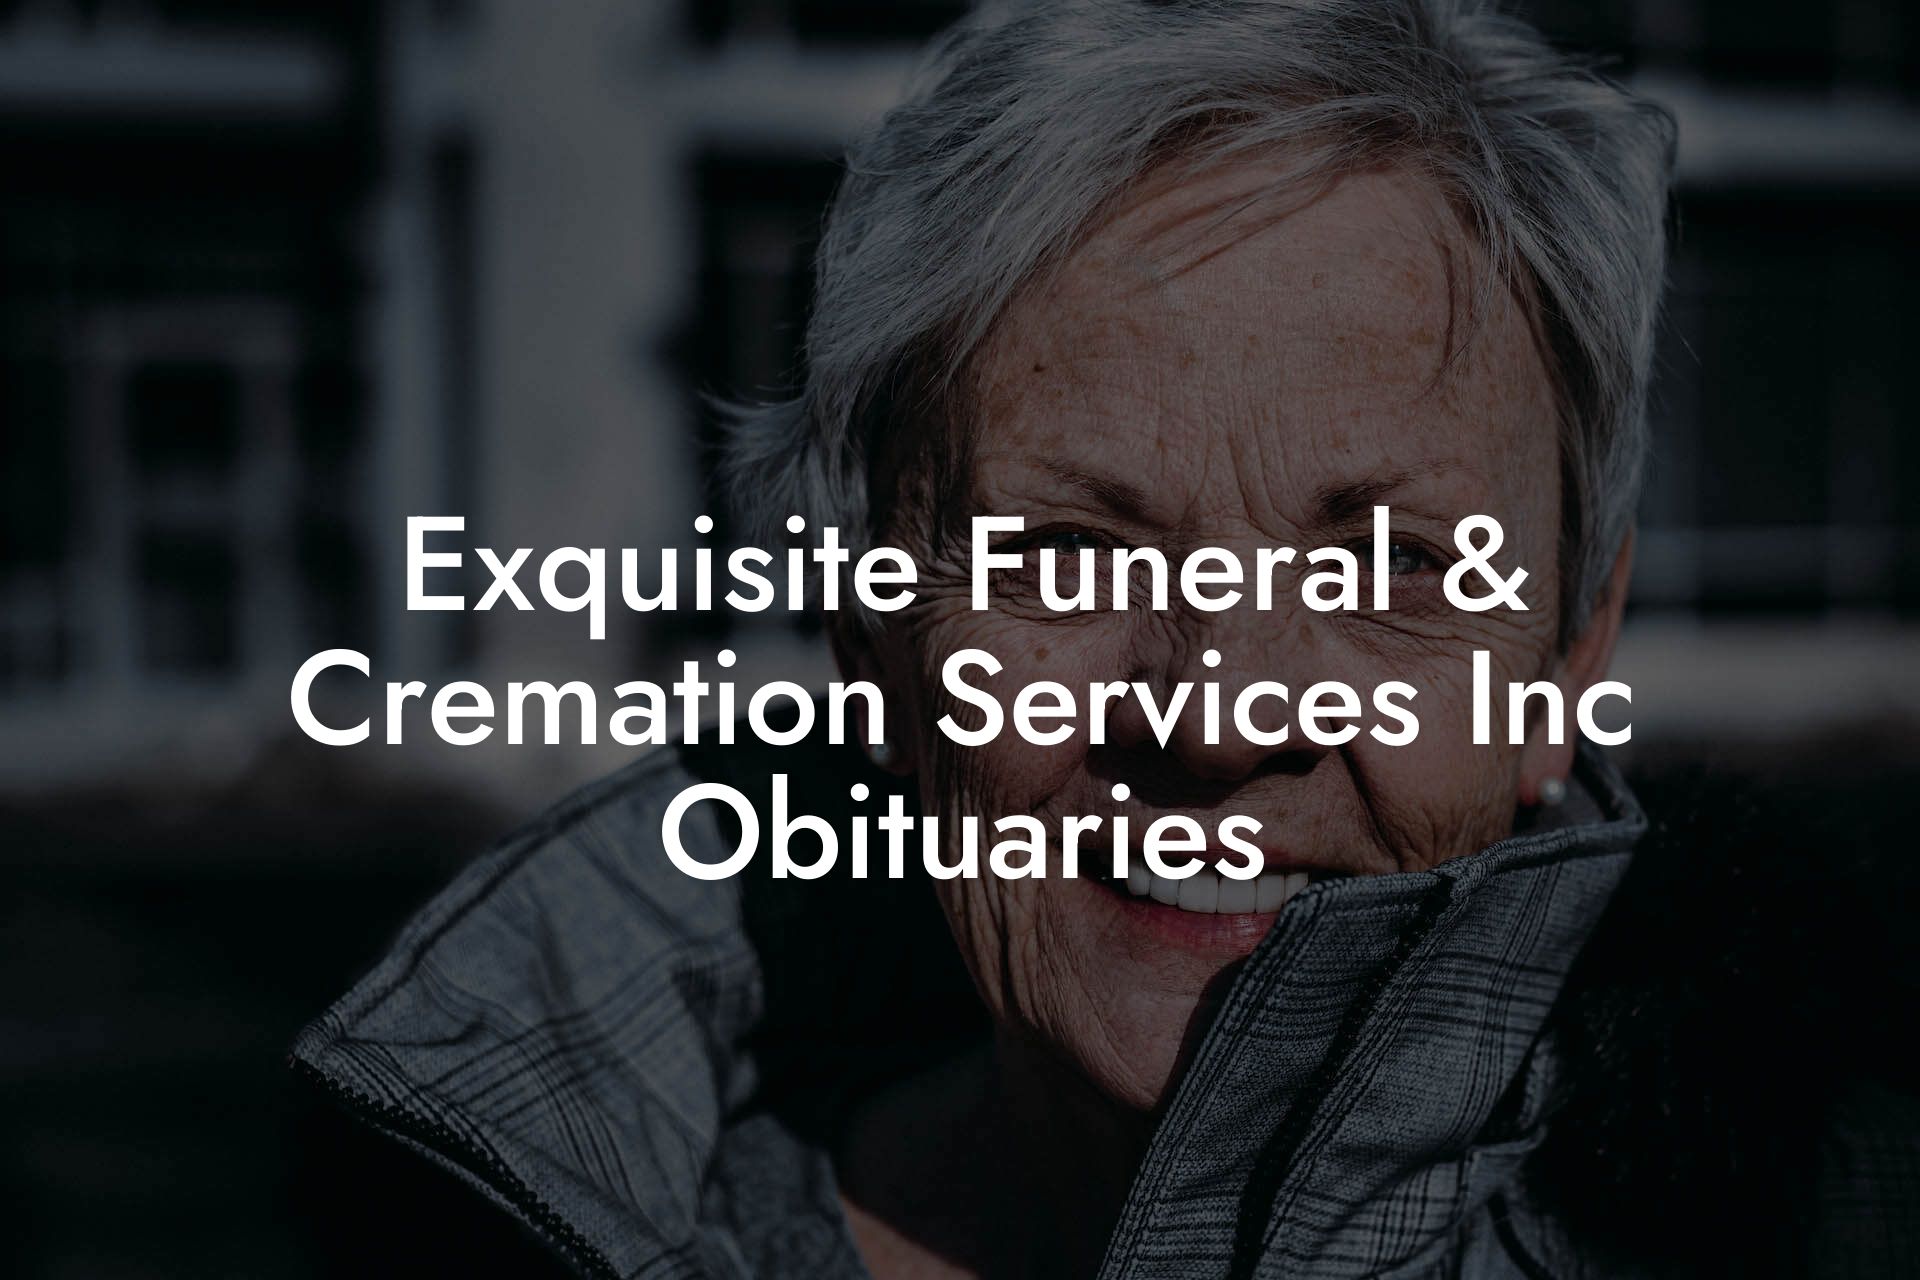 Exquisite Funeral & Cremation Services Inc Obituaries